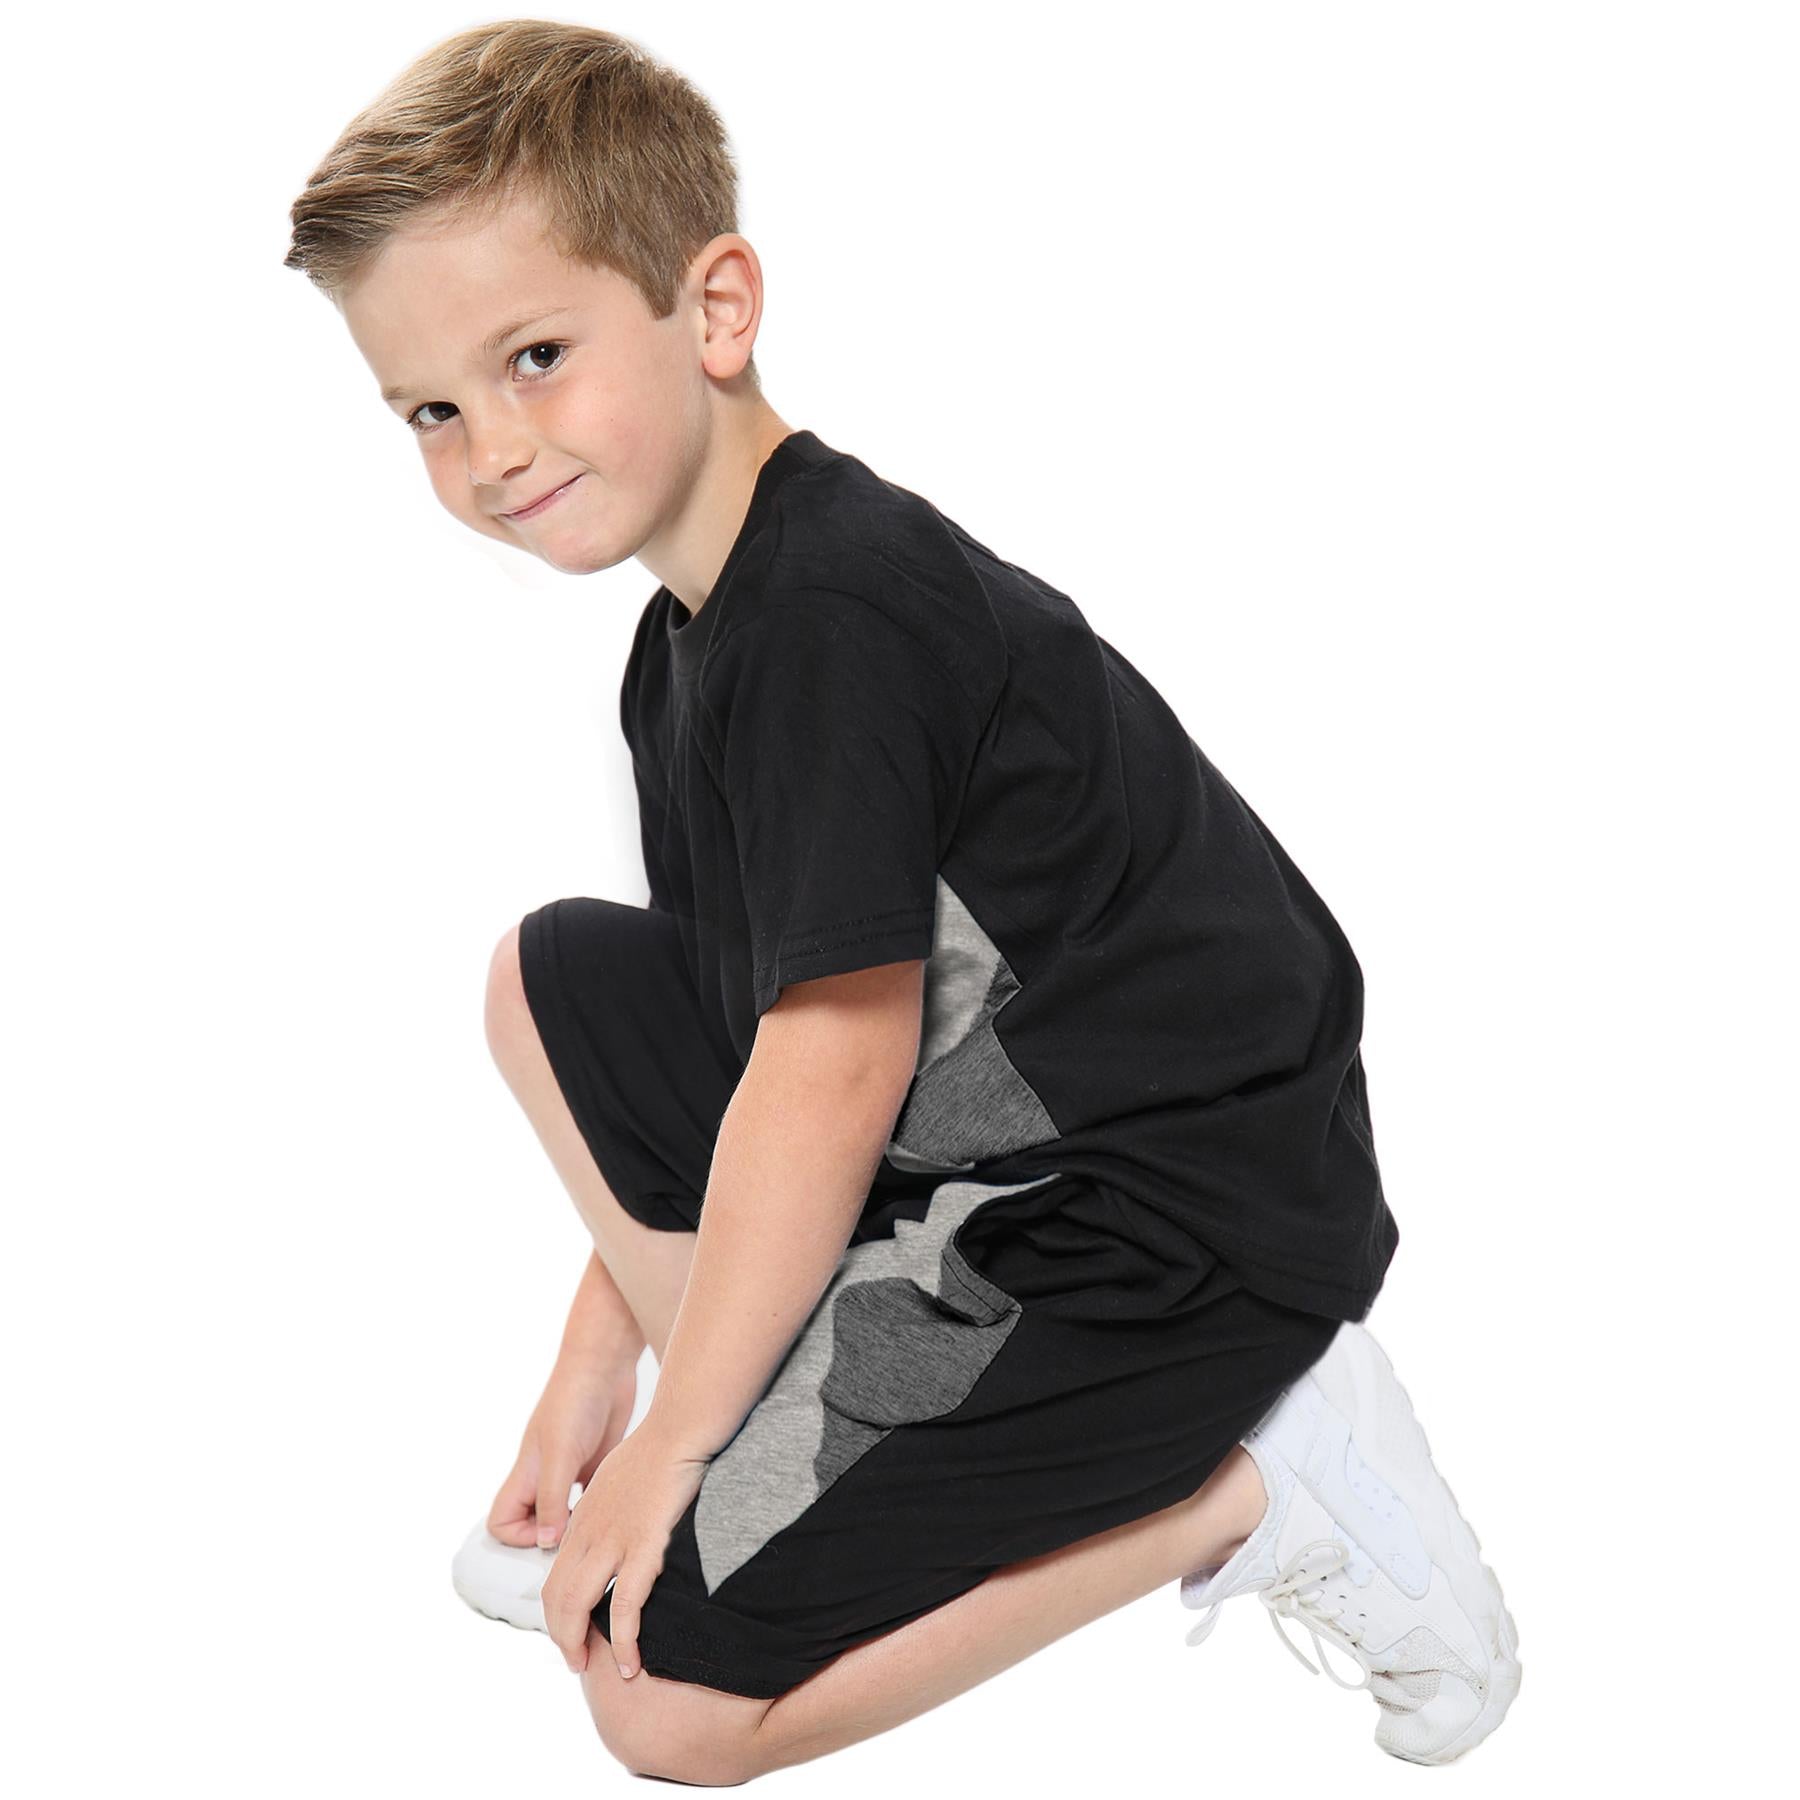 Kids Boys Girls T Shirts 100% Cotton Contrast Panelled Summer Top & Shorts Set